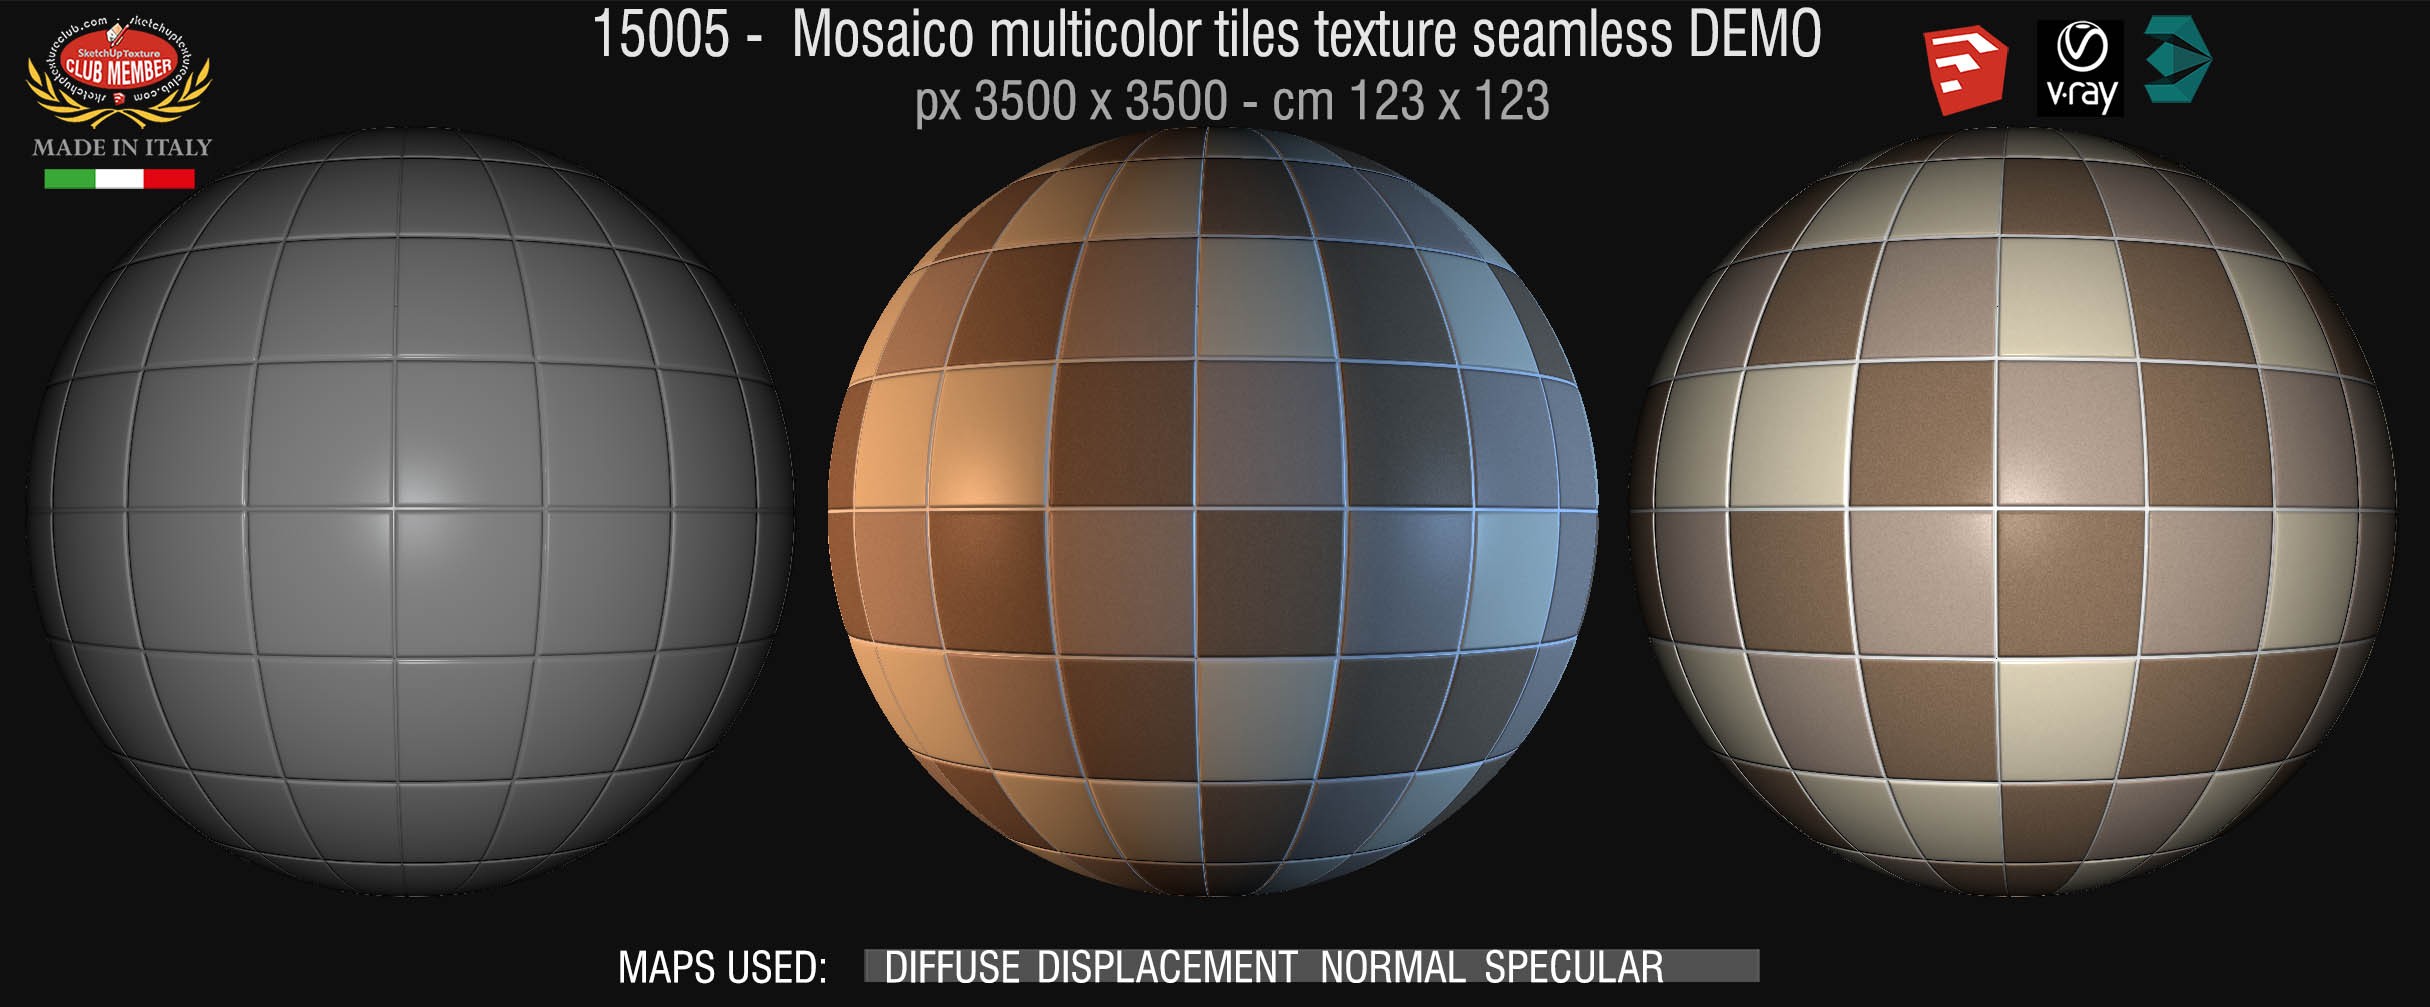 15005 Mosaico multicolor tiles texture seamless + maps DEMO